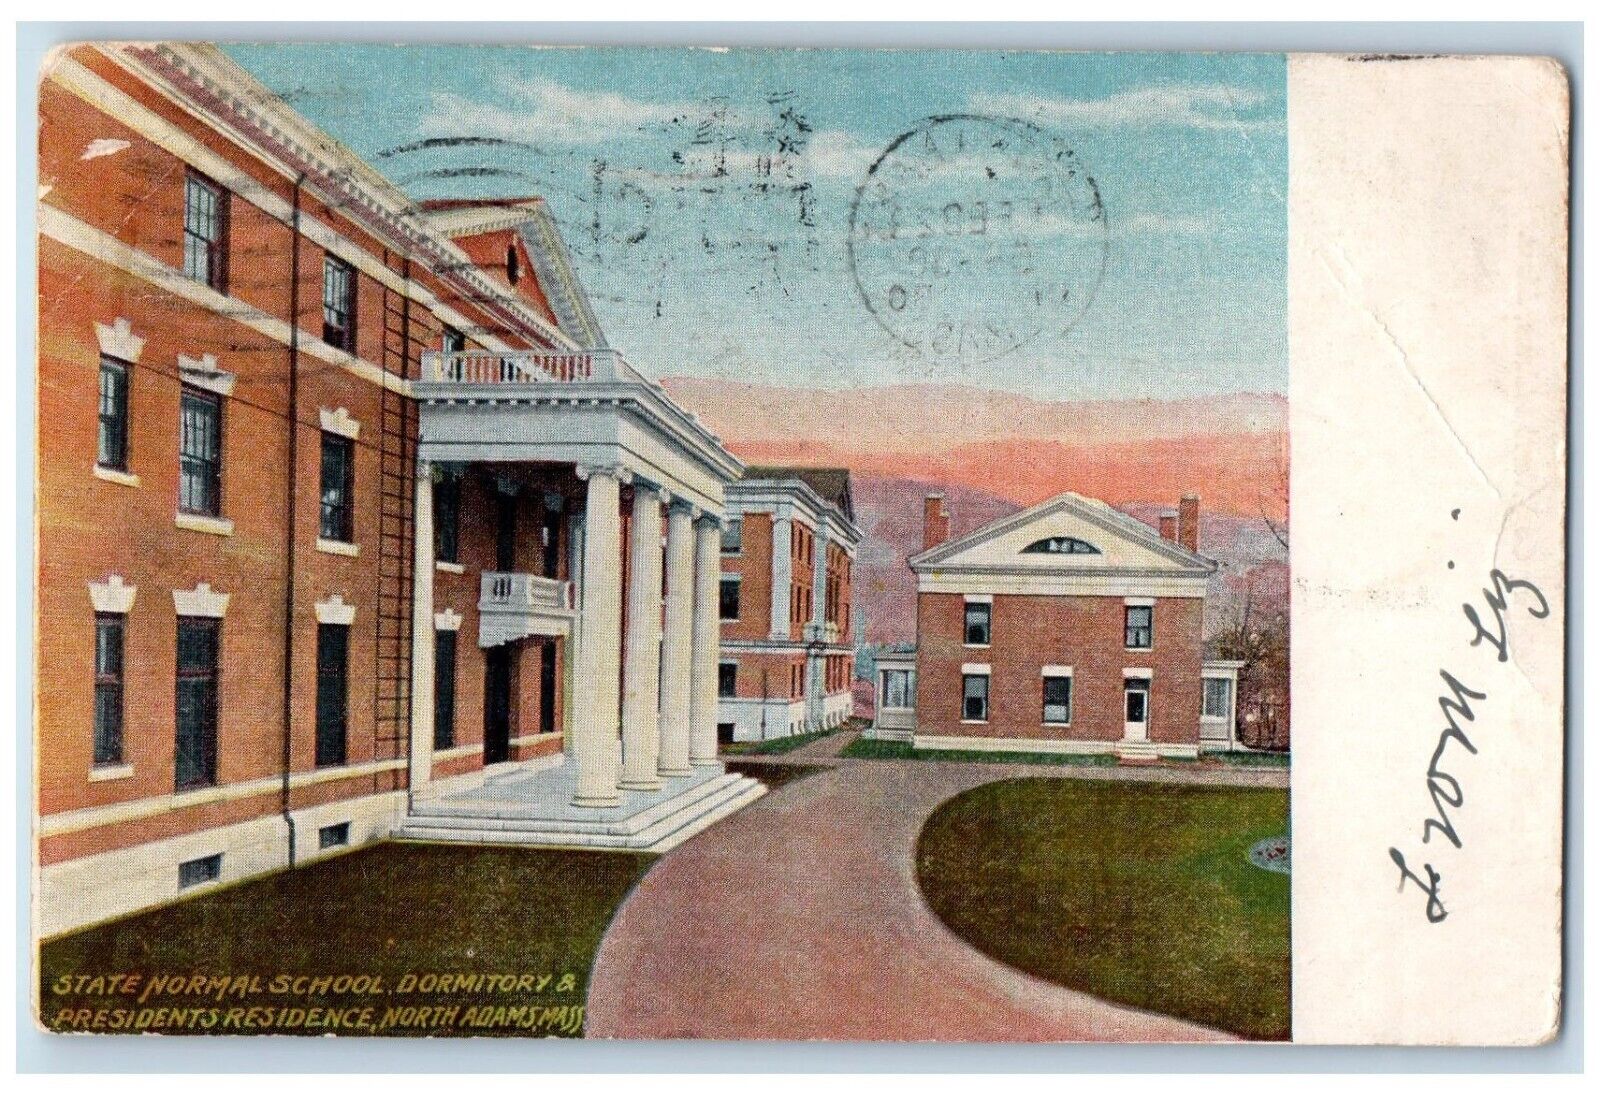 c1905s State Normal School Dormitory President Residence Massachusetts Postcard